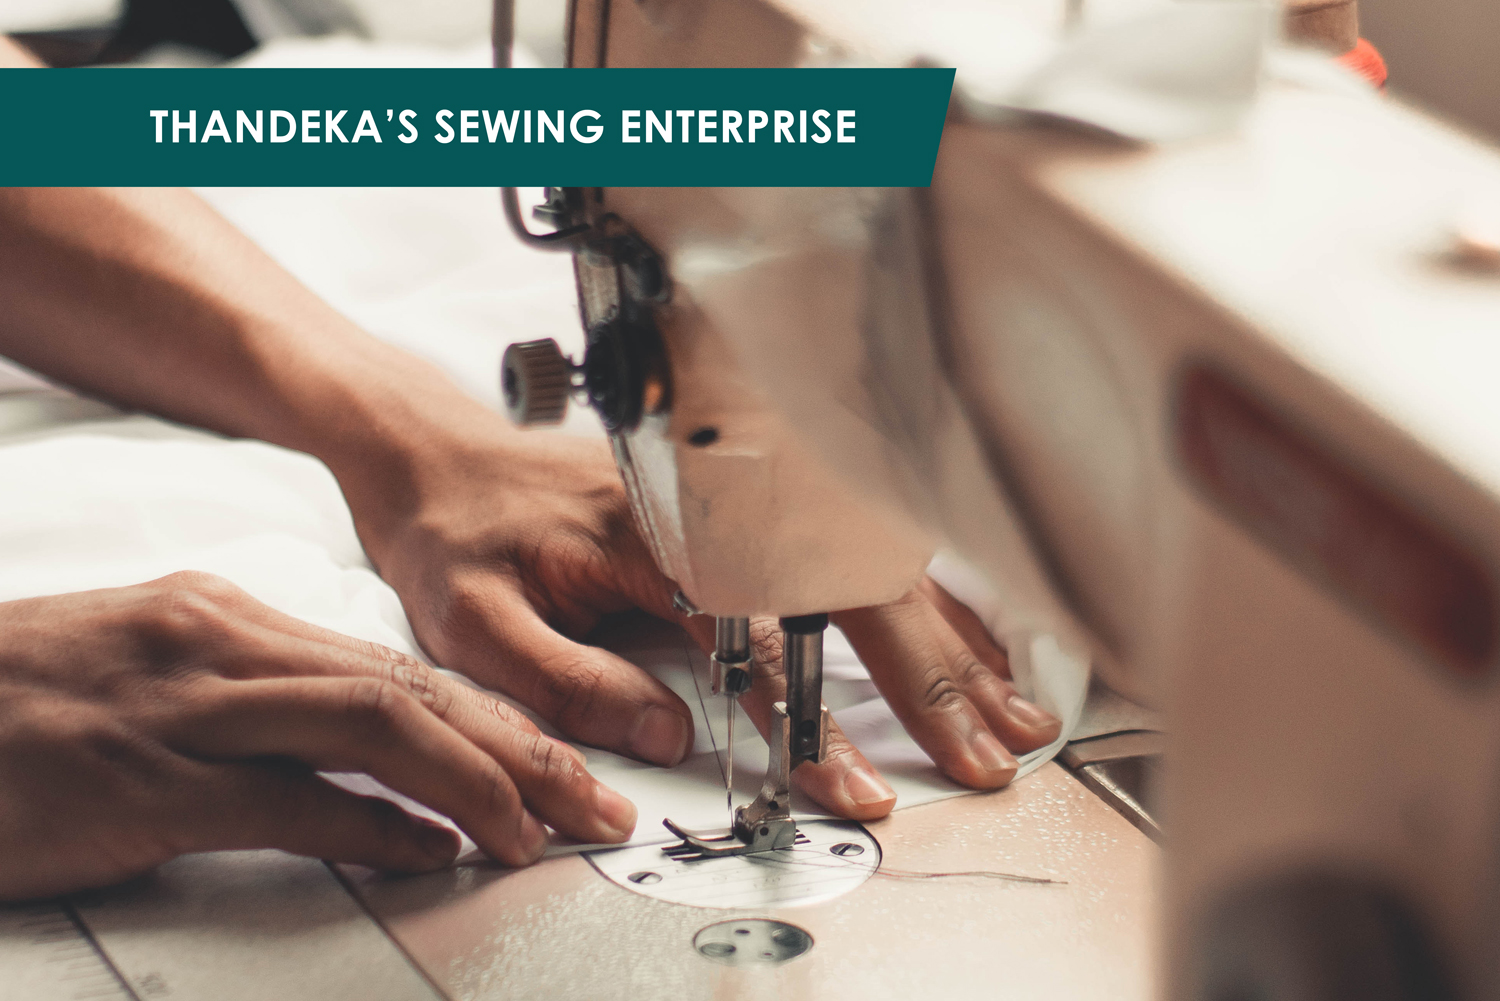 Thandeka’s Sewing Enterprise